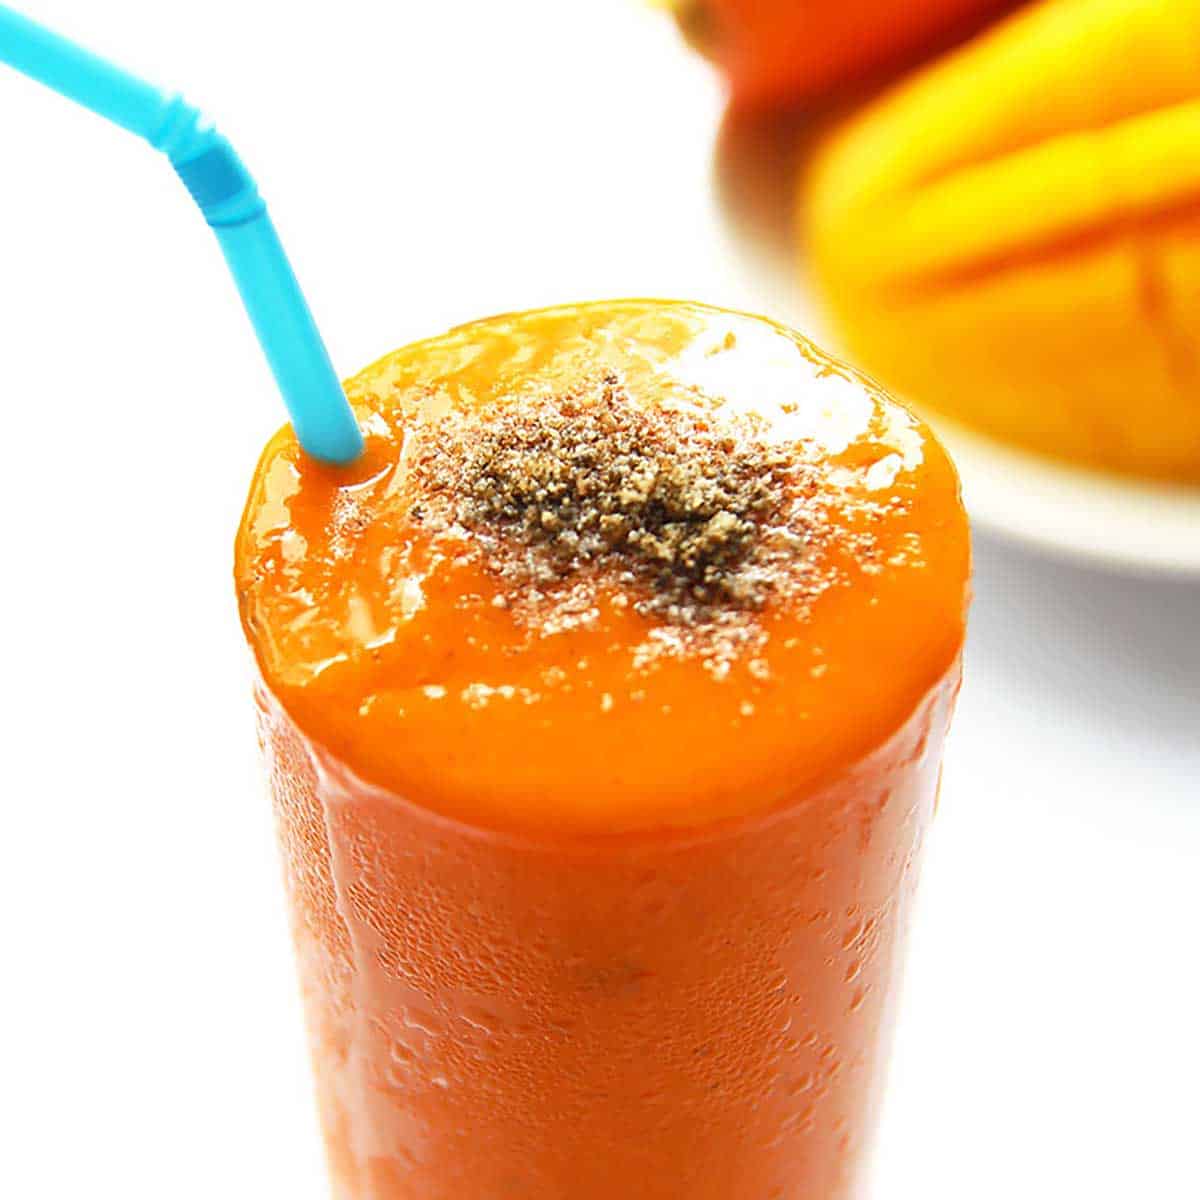 https://leelalicious.com/wp-content/uploads/2015/07/Mango-Pineapple-Carrot-Smoothie-Recipe.jpg